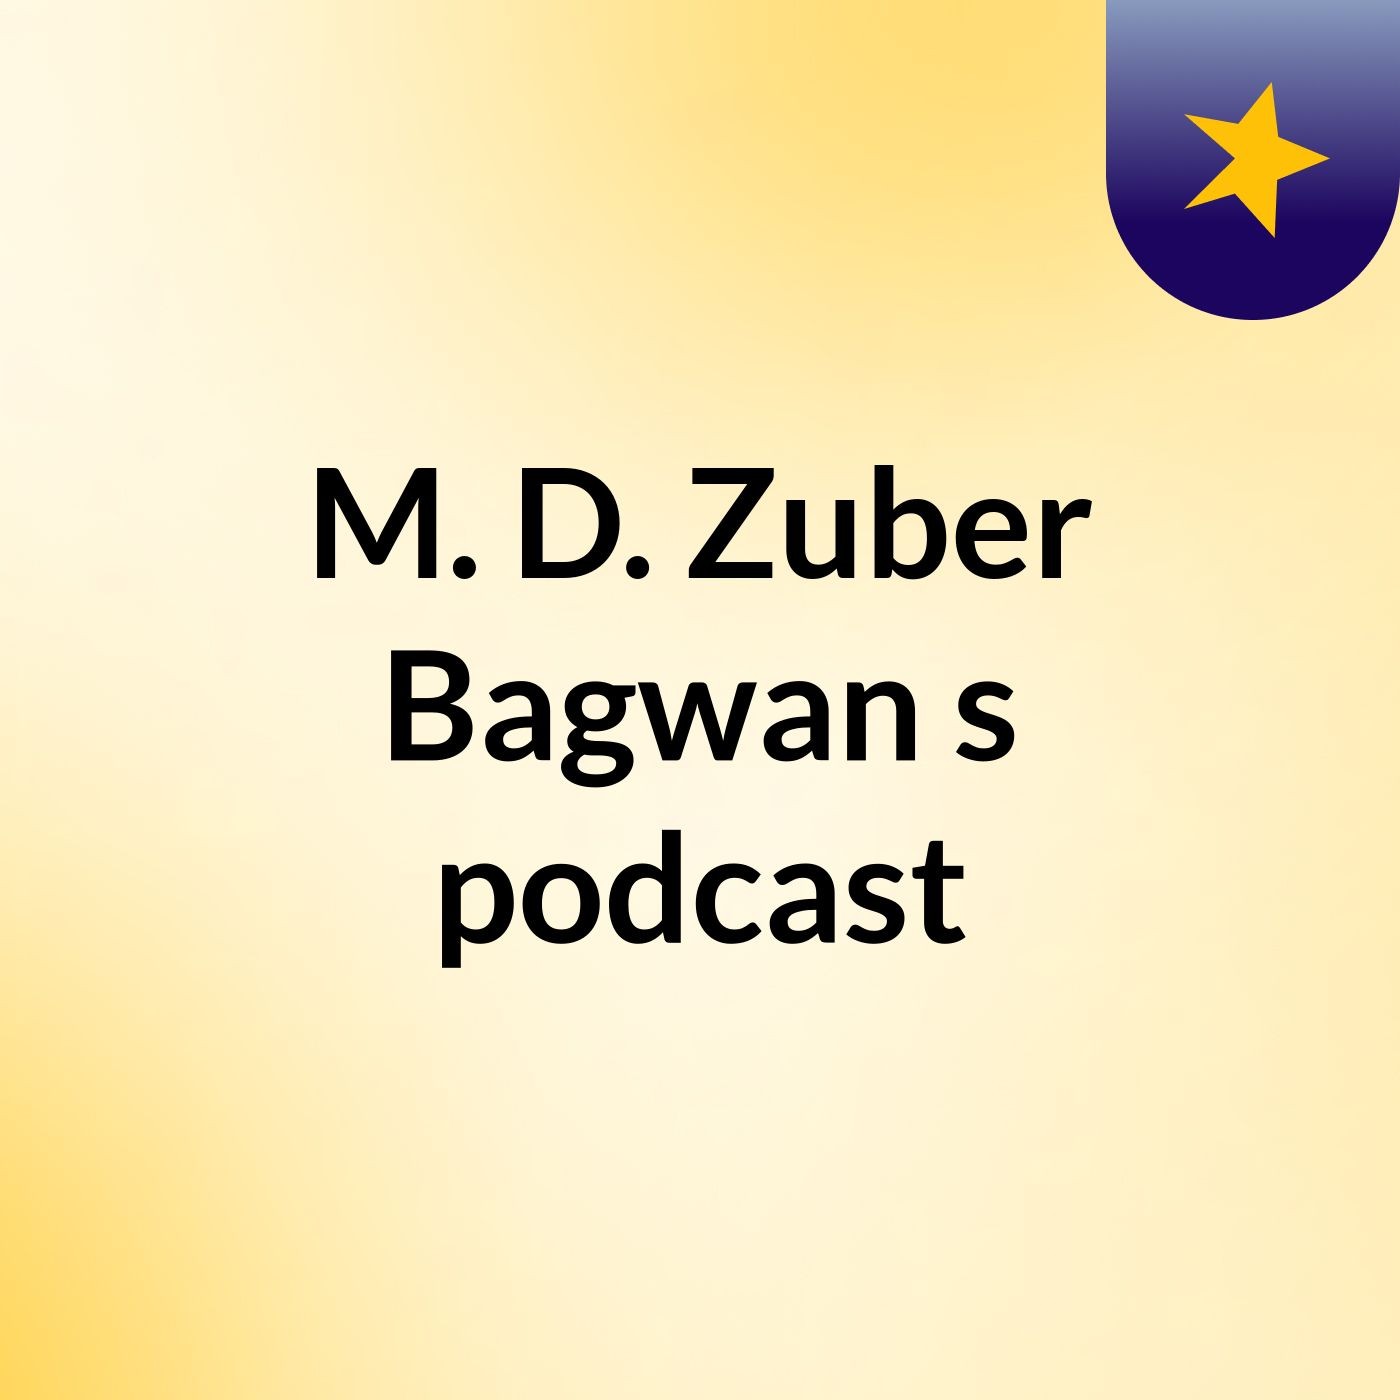 M. D. Zuber Bagwan's podcast